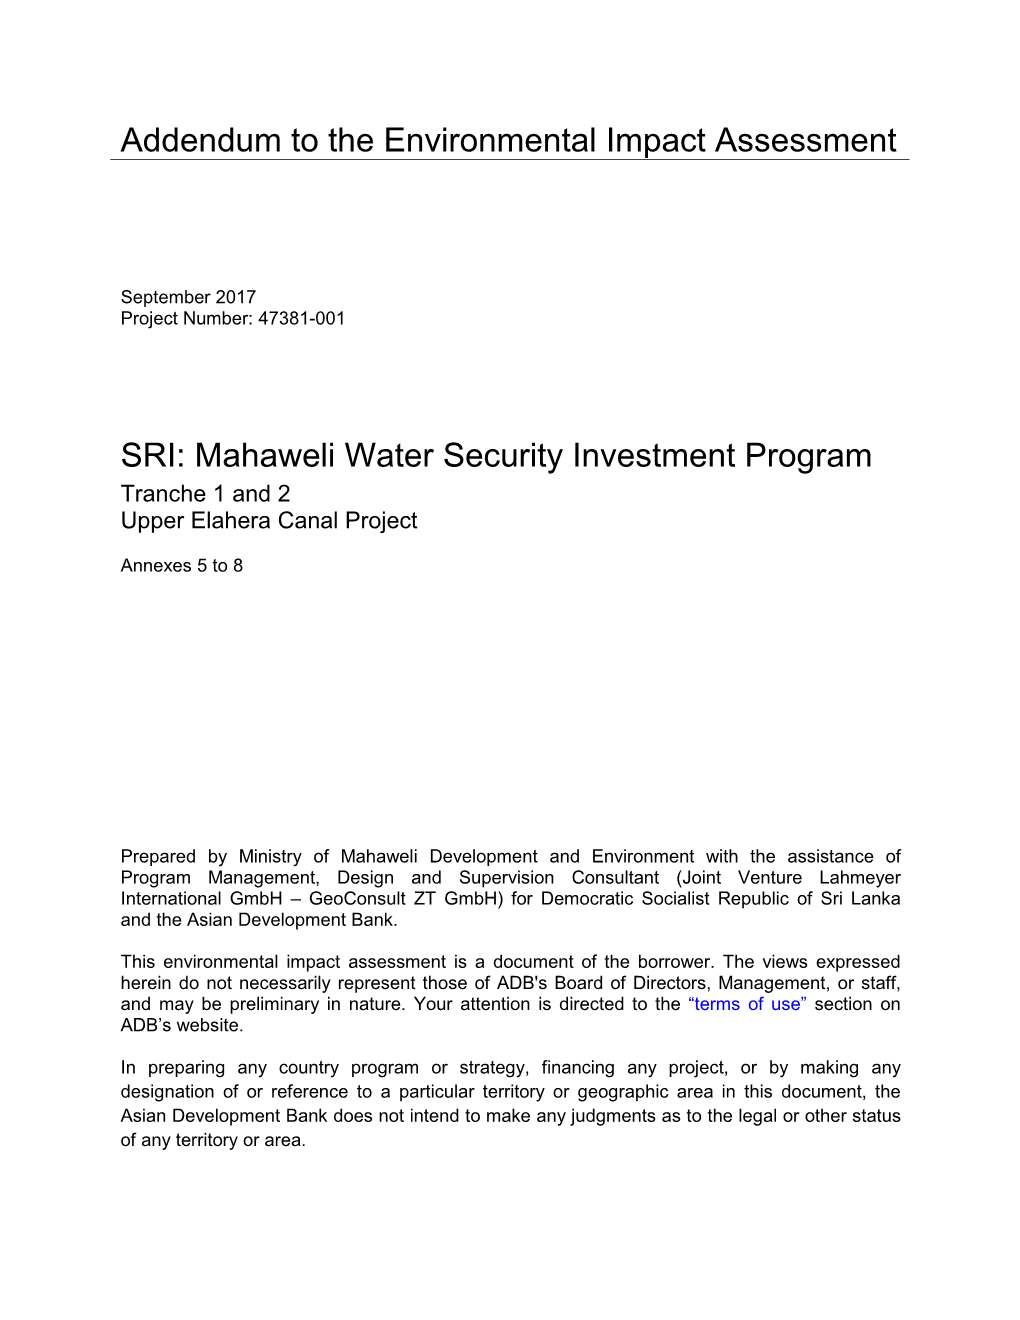 Addendum to the Environmental Impact Assessment SRI: Mahaweli Water Security Investment Program